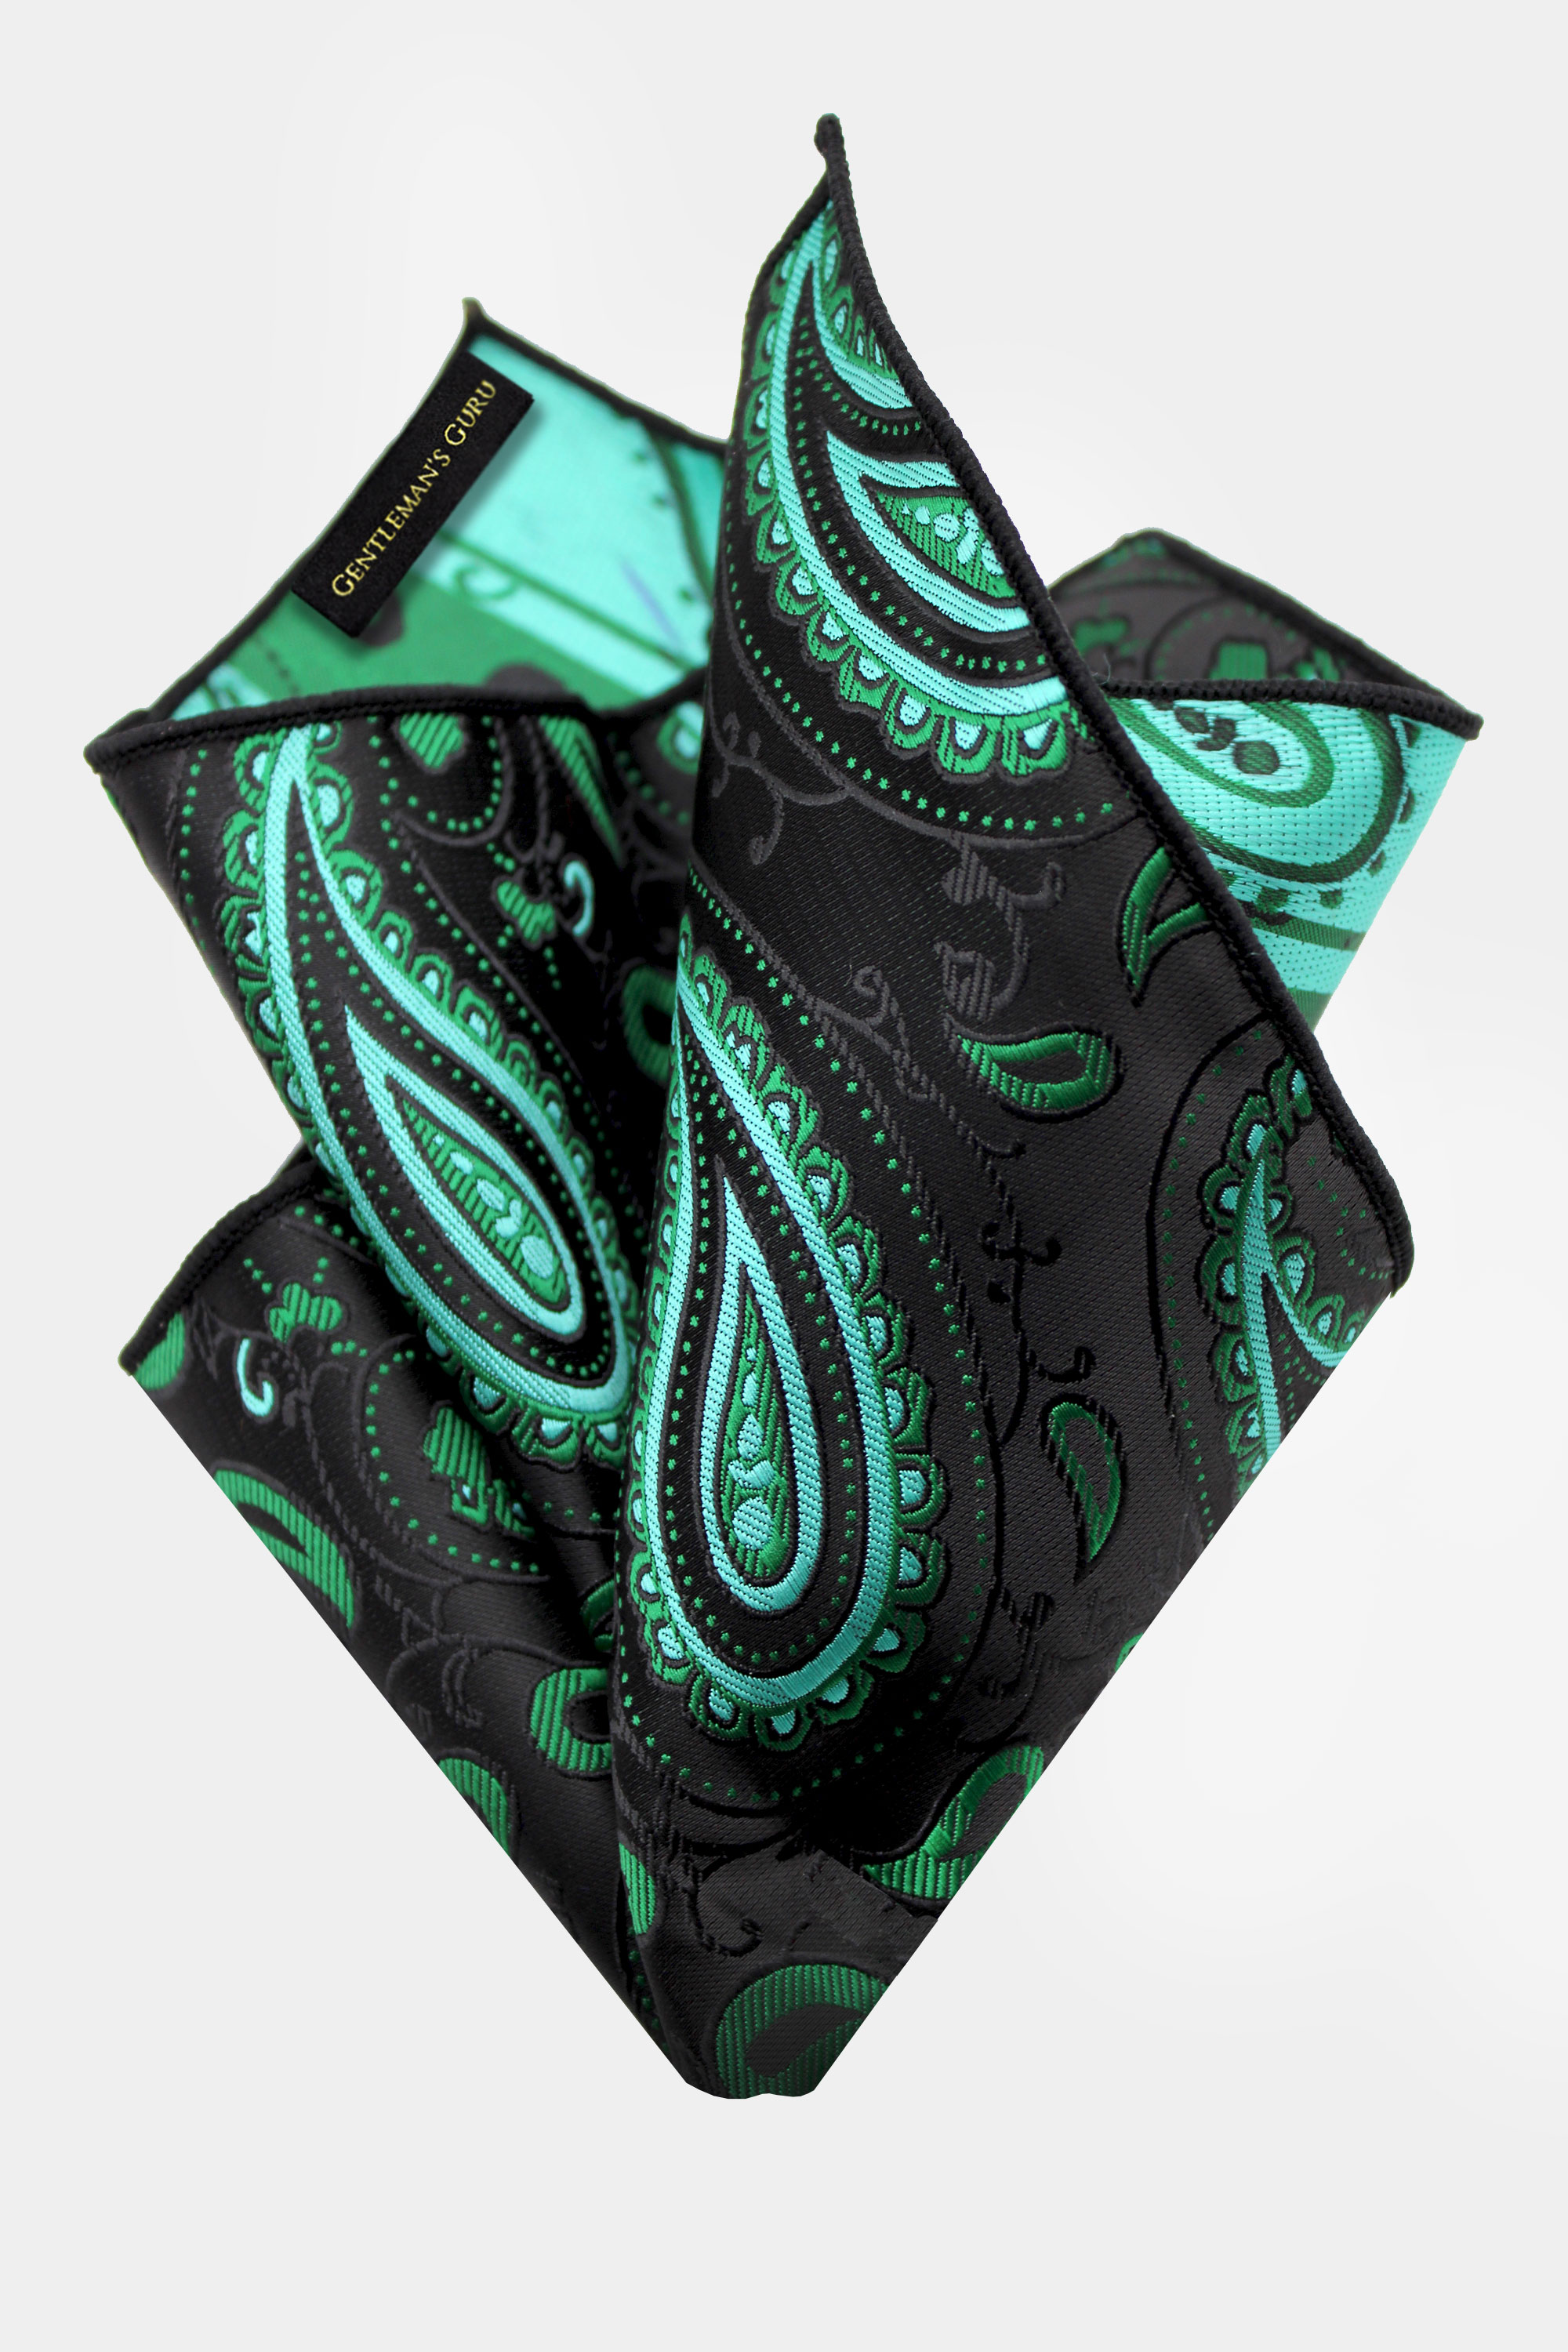 Black-and-Green-Paisley-Pocket-Square-Handkerchief-from-Gentlemansguru.com